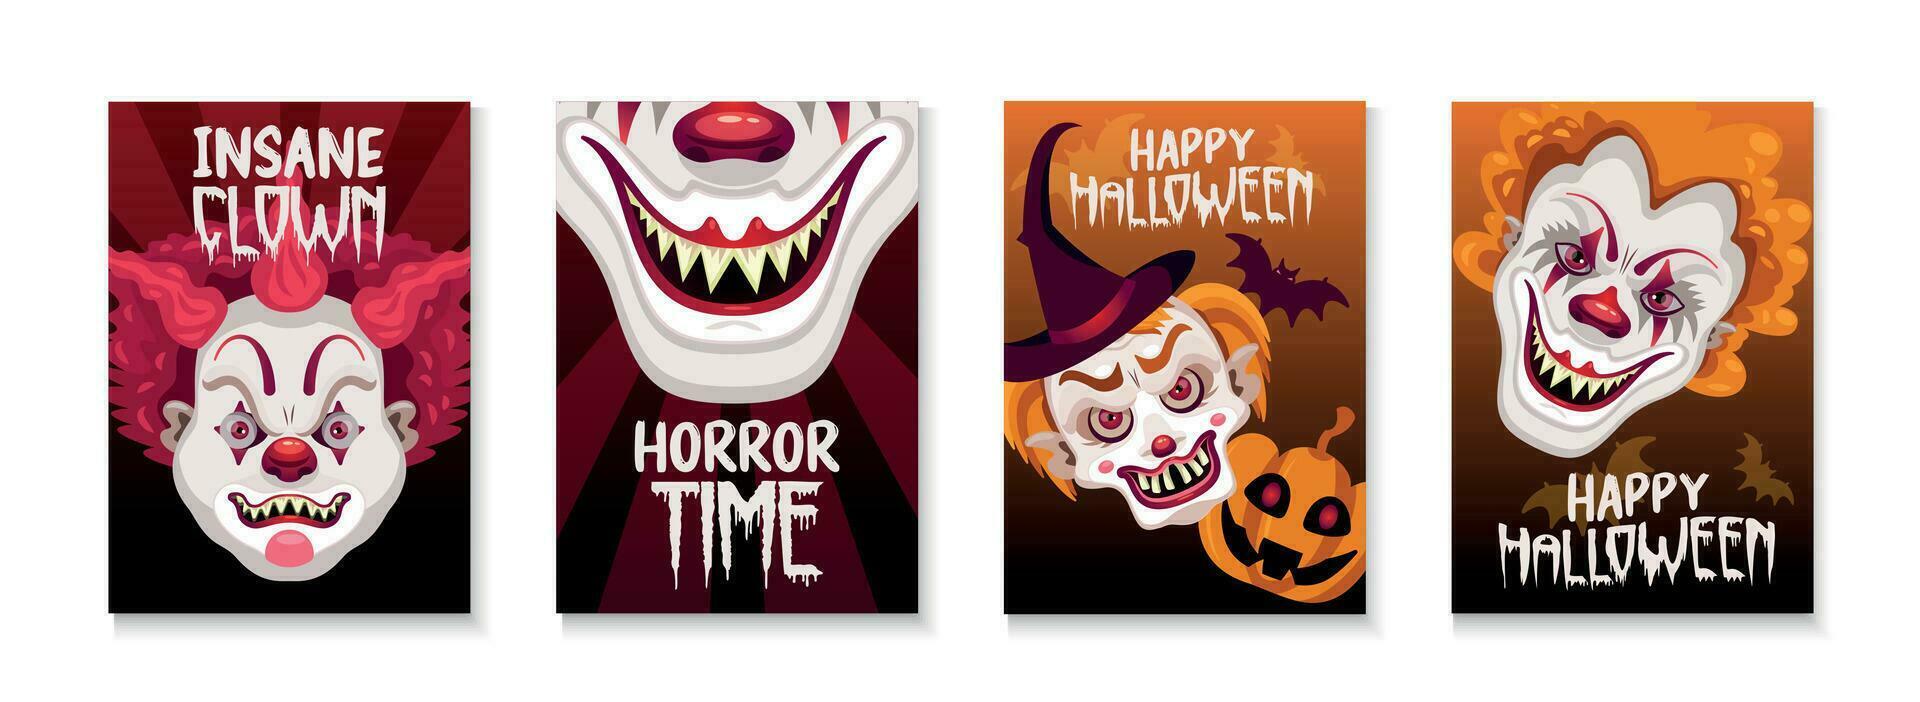 Halloween Horror Clowns Posters vector